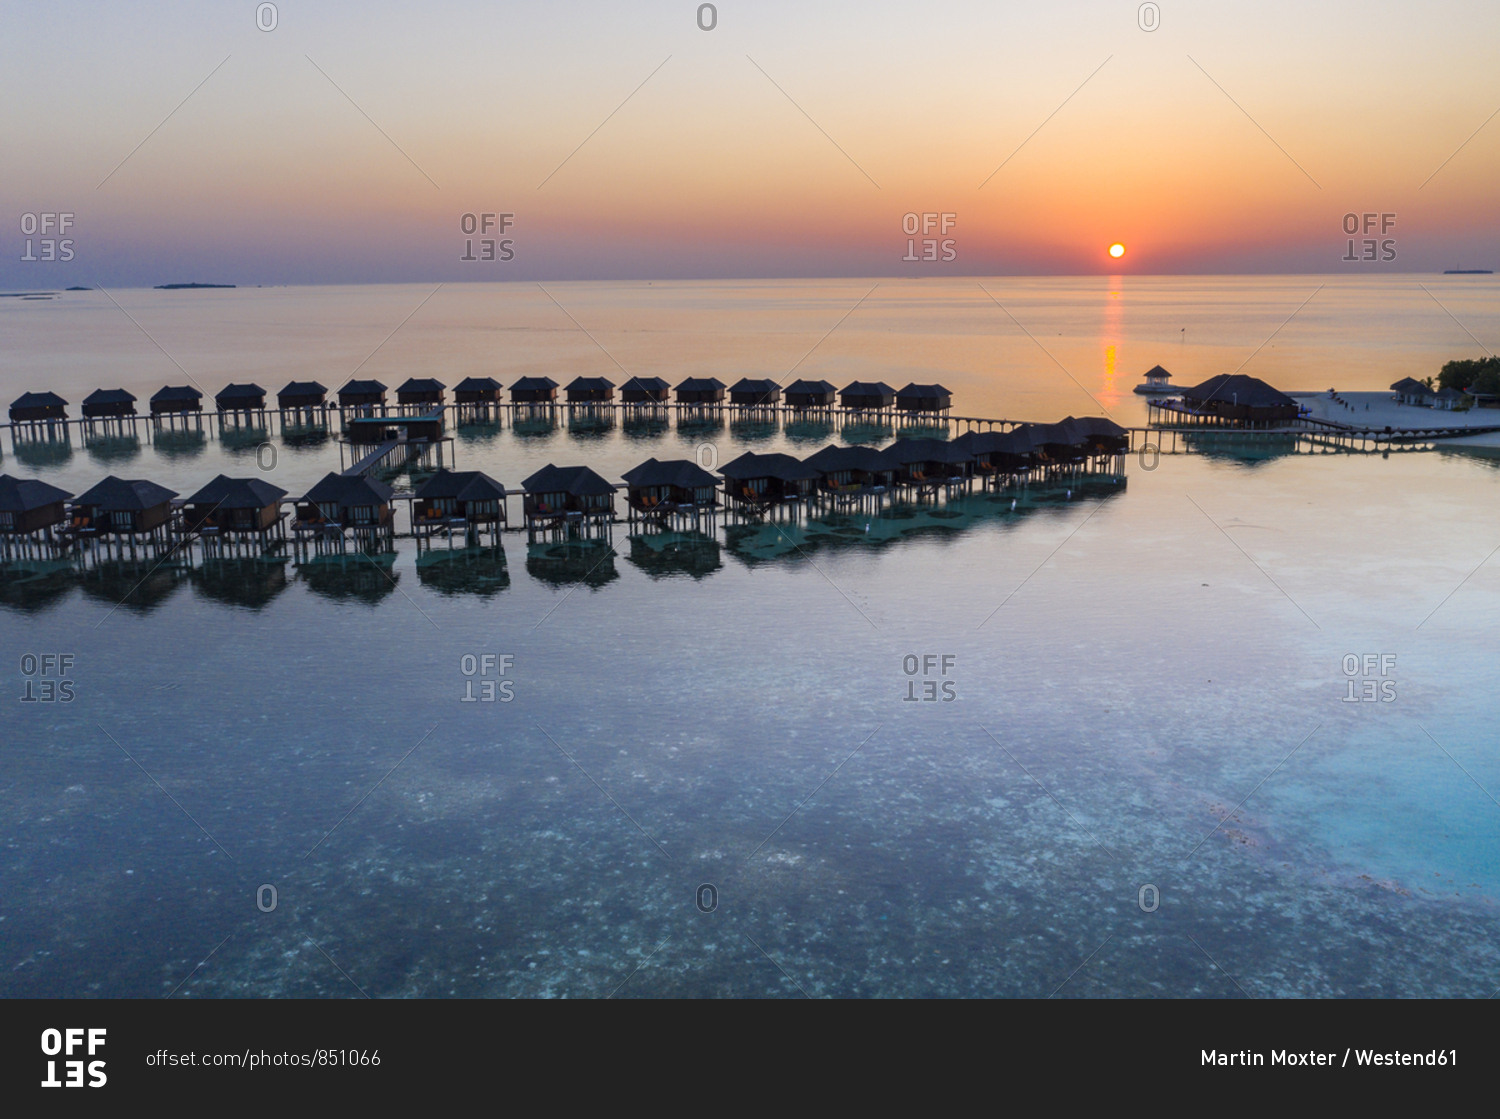 Maldives- Olhuveli island- Resort bungalows on South Male Atoll lagoon at sunset